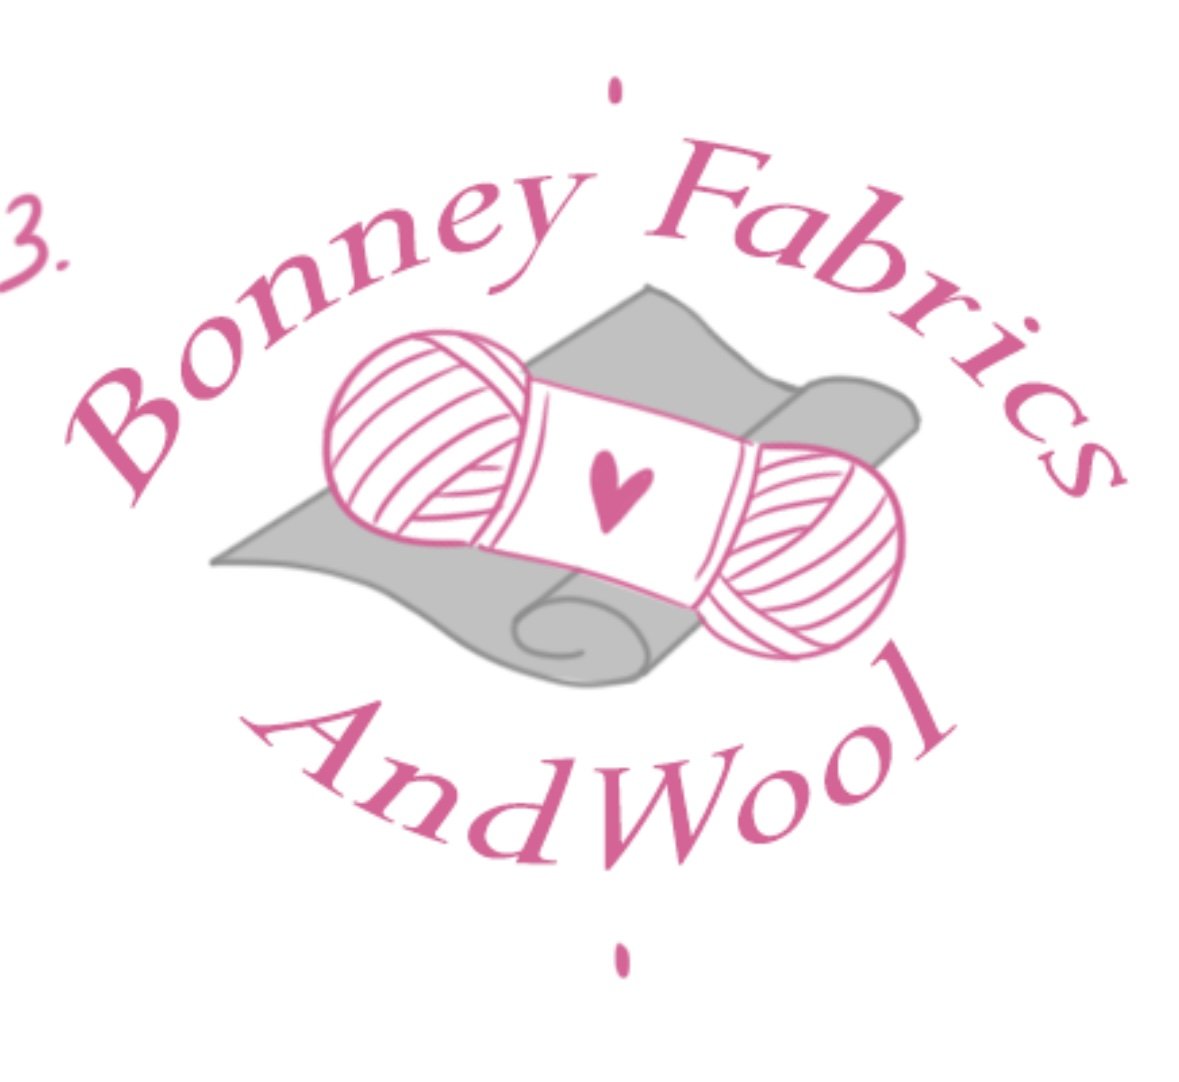 Bonney fabrics and wool